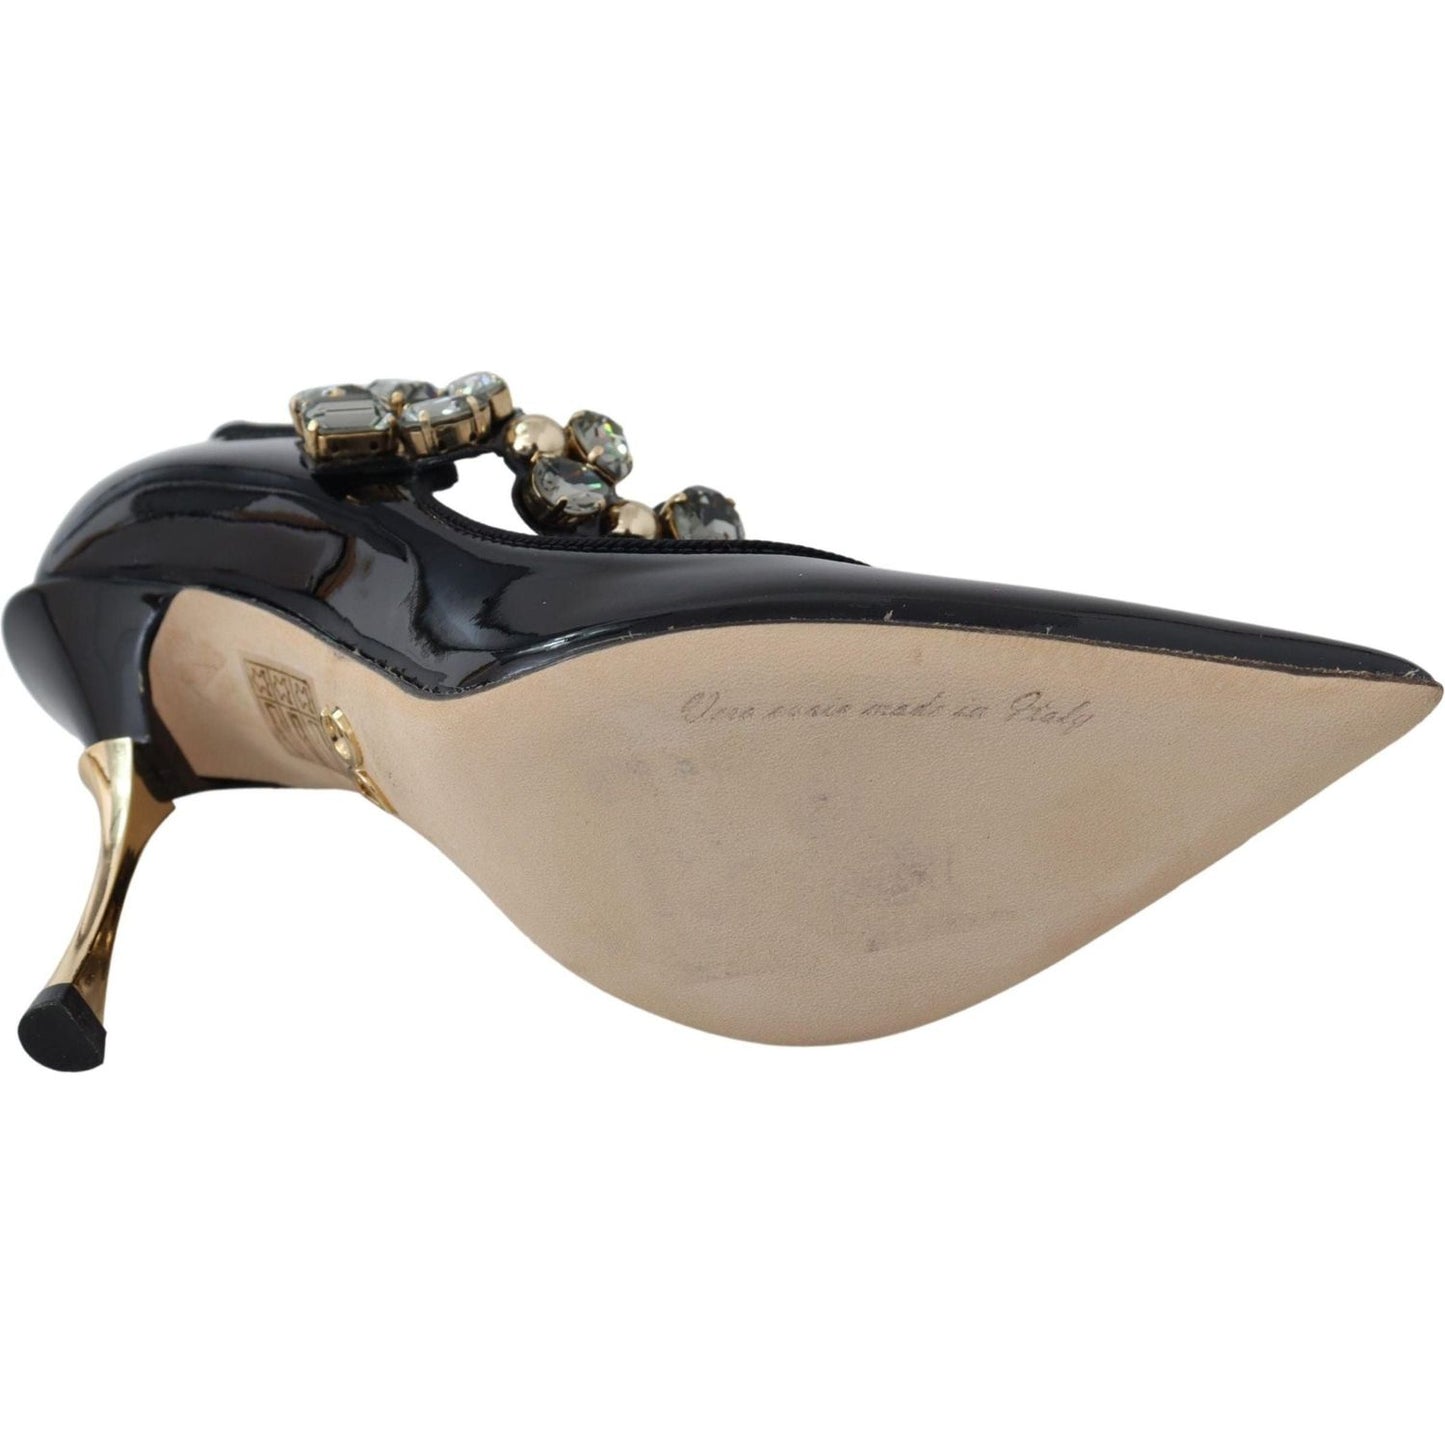 Dolce & Gabbana Elegant Black Leather Crystal Pumps black-leather-crystal-shoes-mary-jane-pumps